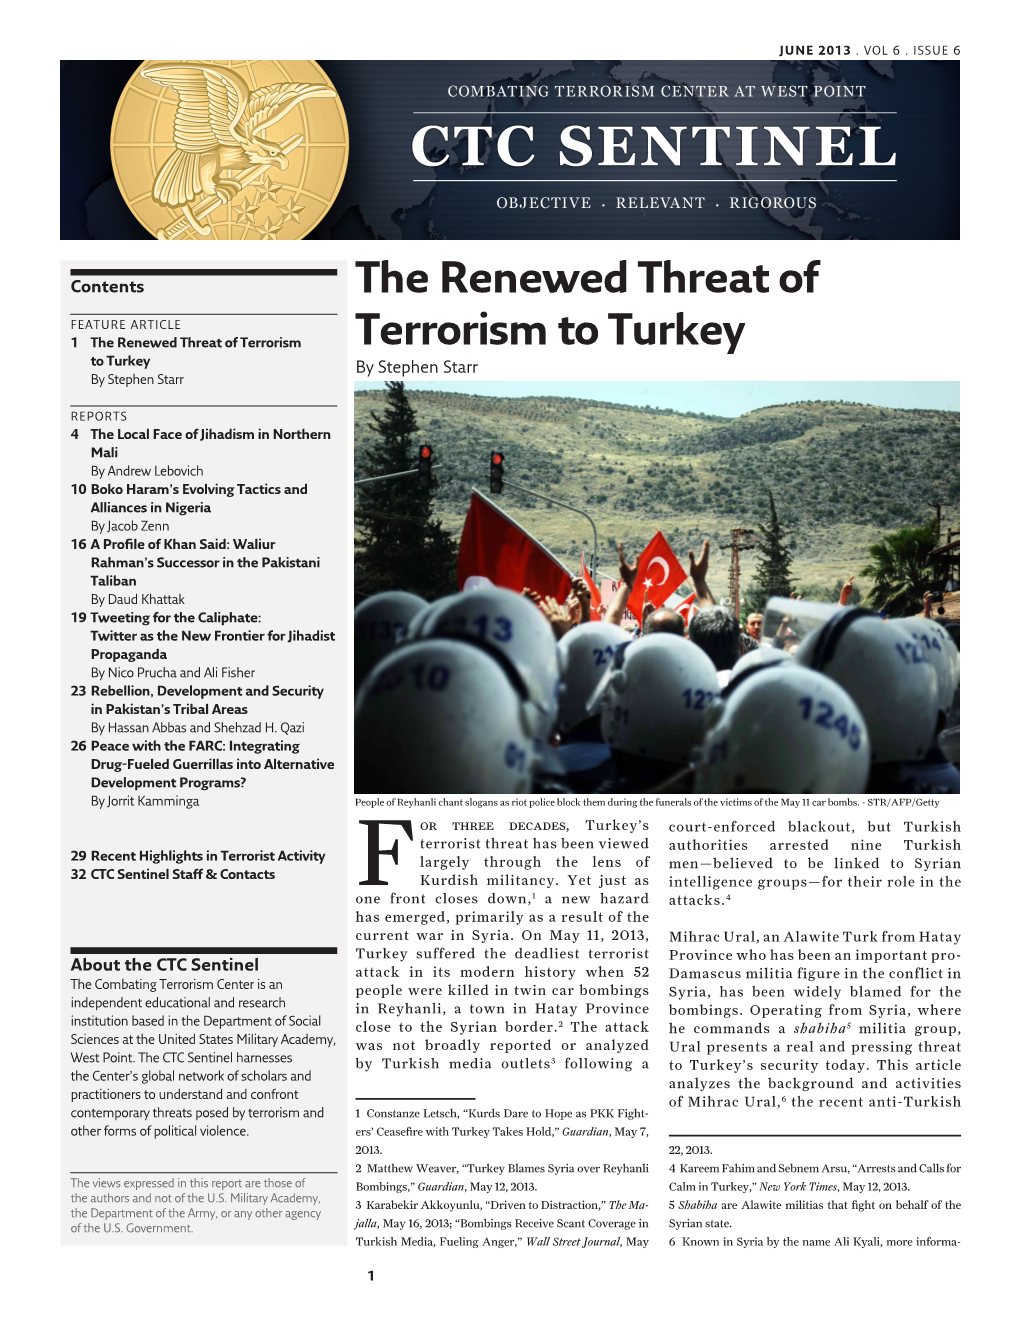 The Renewed Threat of Terrorism to Turkey